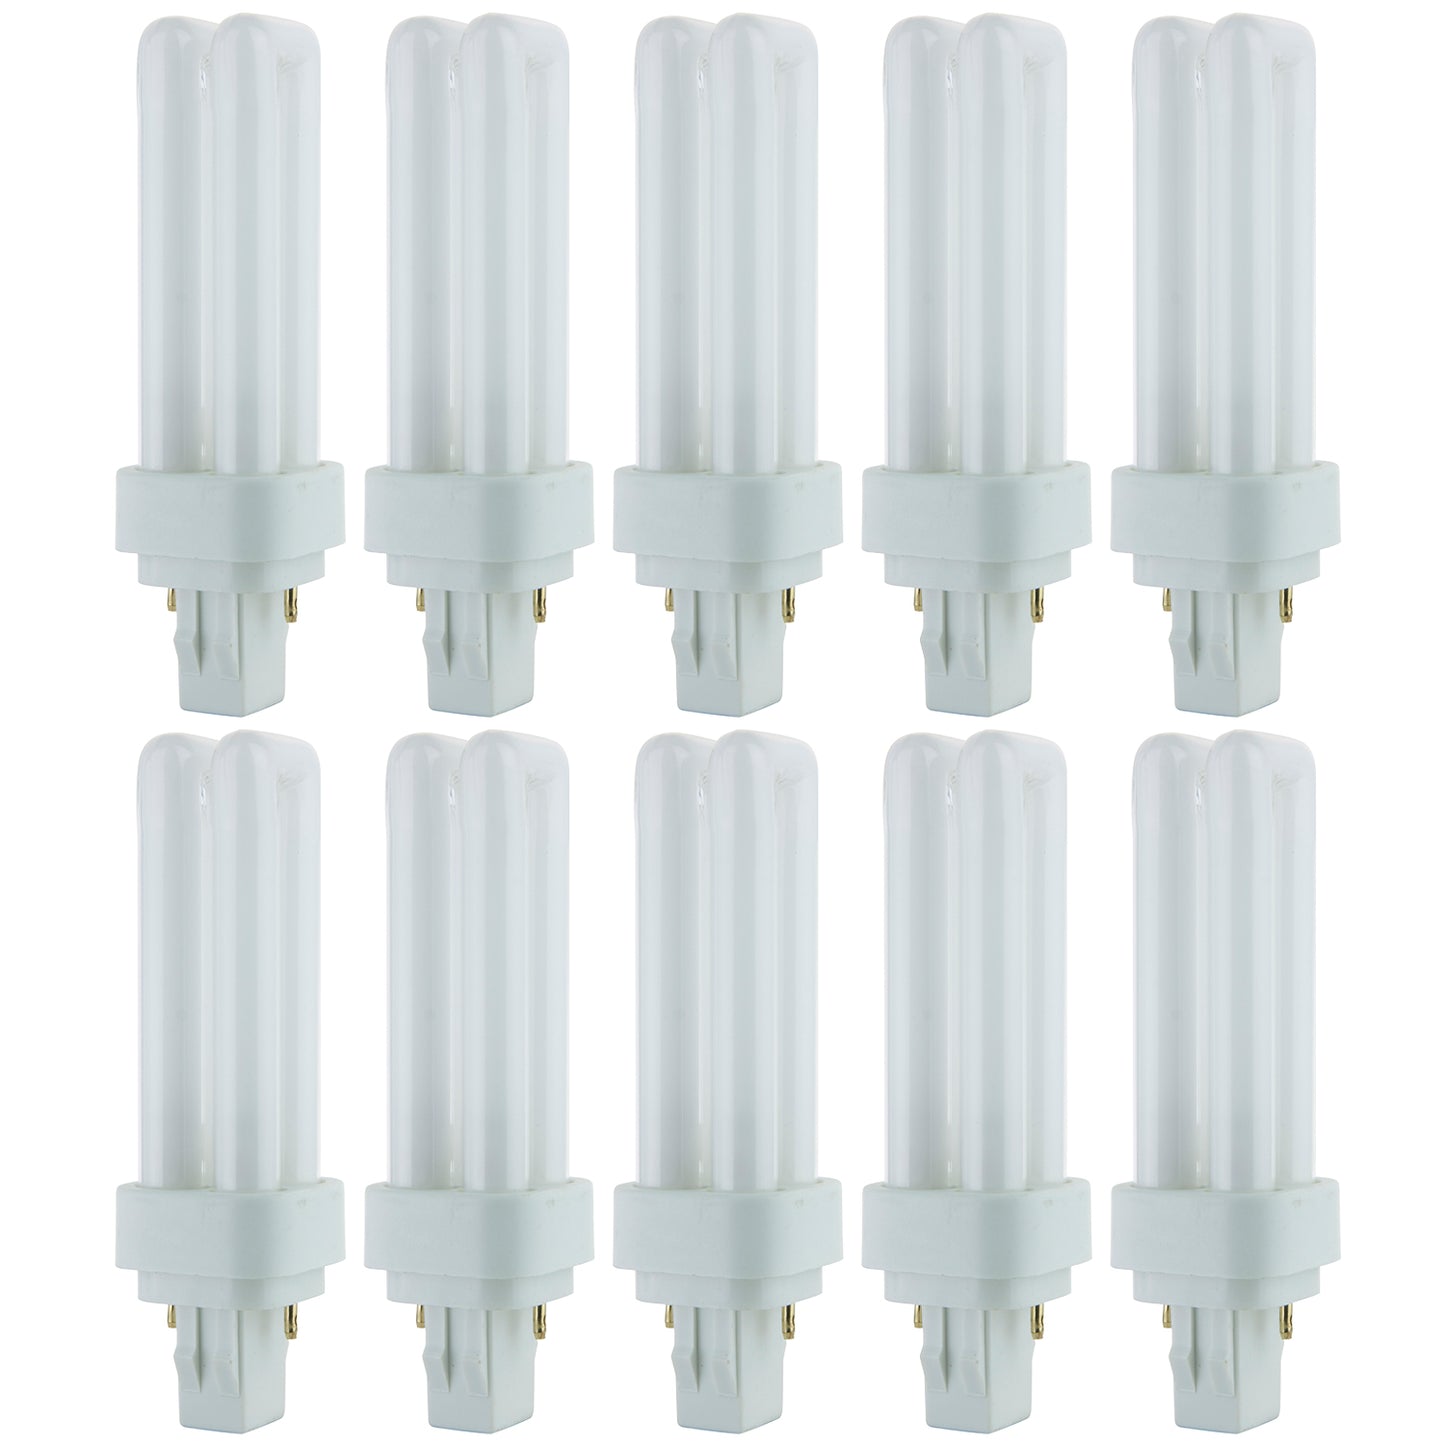 Sunlite 40539 PLD13/SP30K/10PK Double Twin Tube Tube Compact Fluorescent Lamp, PLD 2-Pin, 13 Watts, 660 Lumens, 3000K Warm White, 2-Pin (GX23-2) Base, 10 Pack